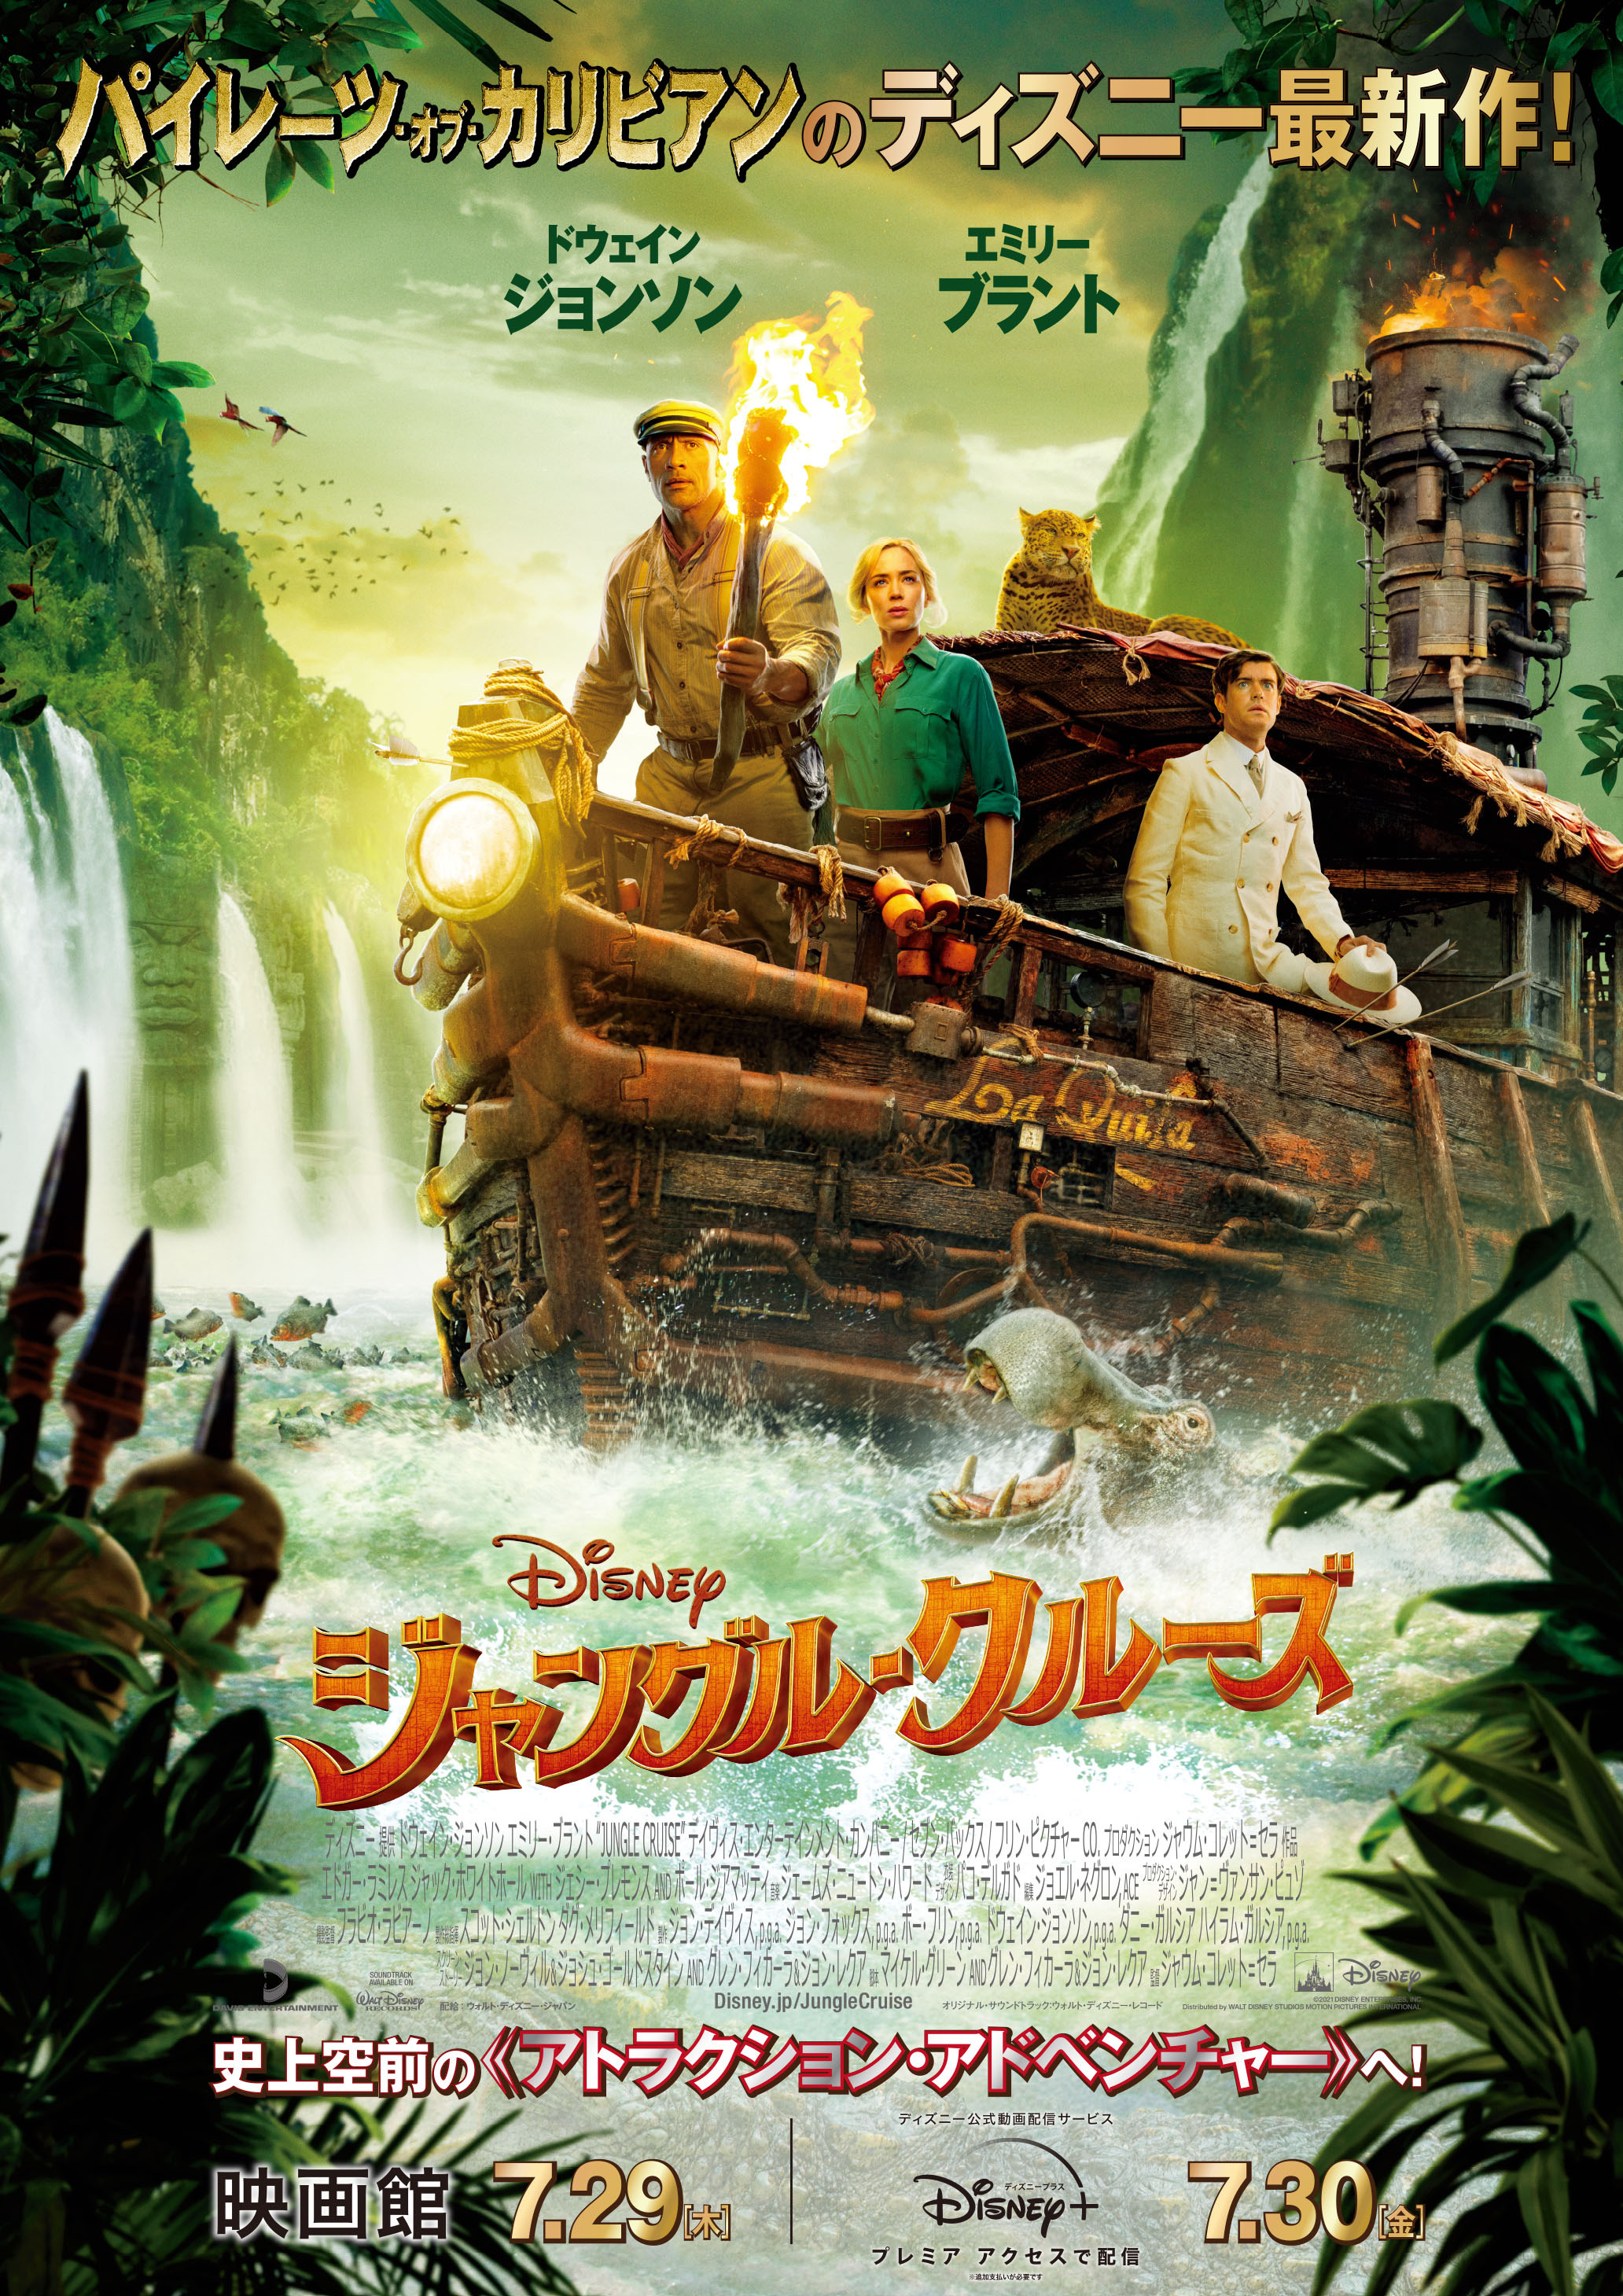 Mega Sized Movie Poster Image for Jungle Cruise (#14 of 26)